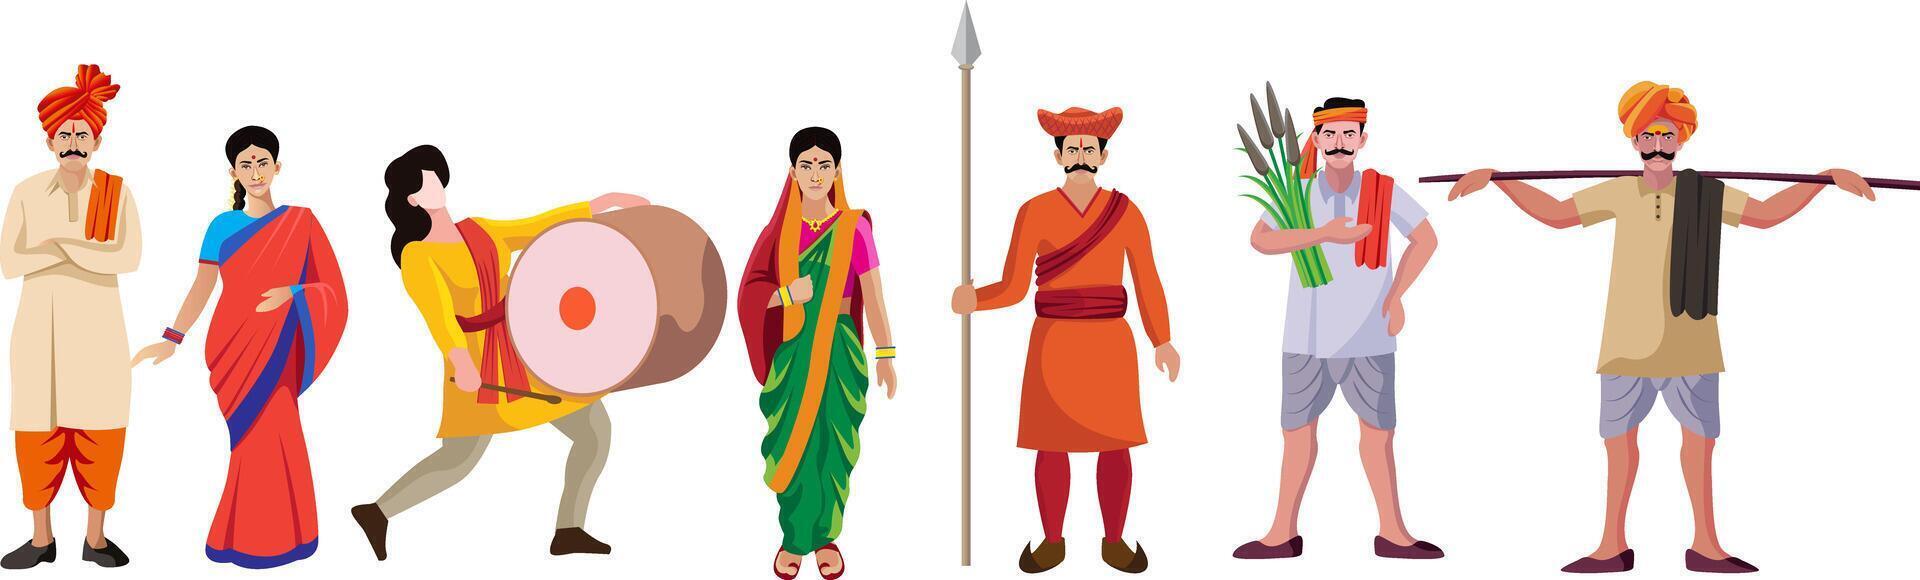 maharashtra traditional dress people vector